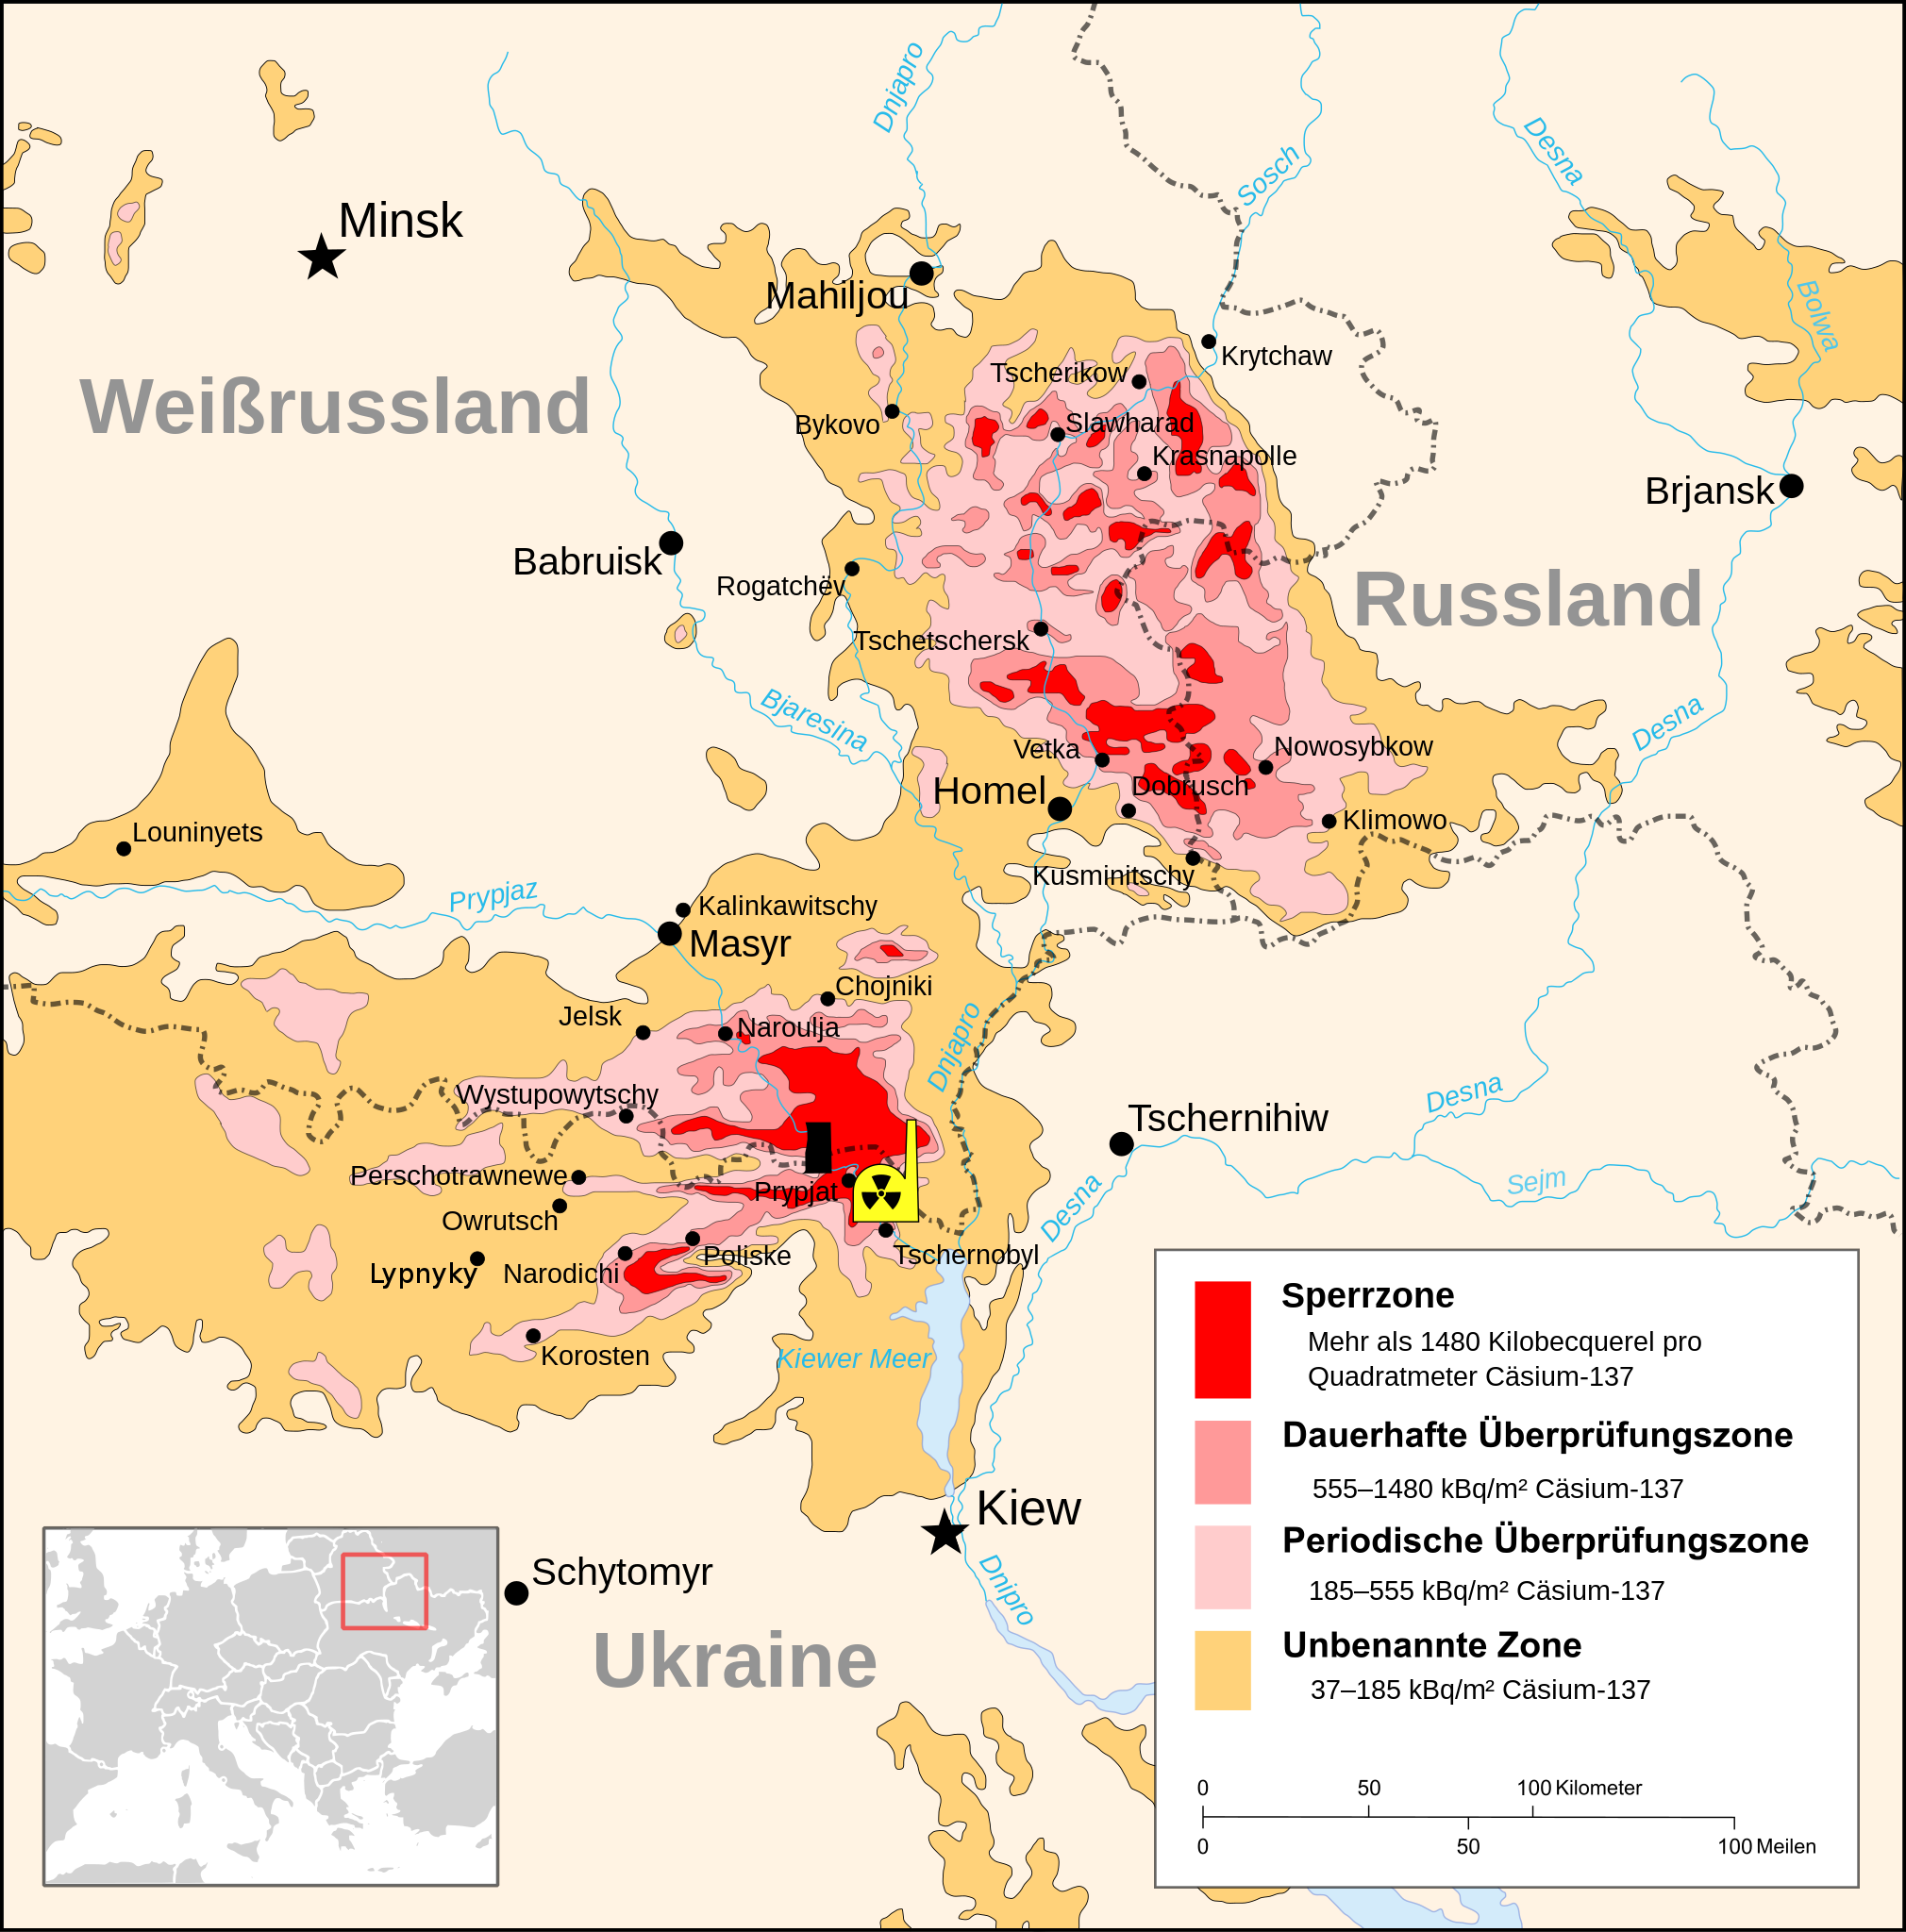 gravel combination Geography File:Tchernobyl radiation 1996-de.svg - Wikimedia Commons